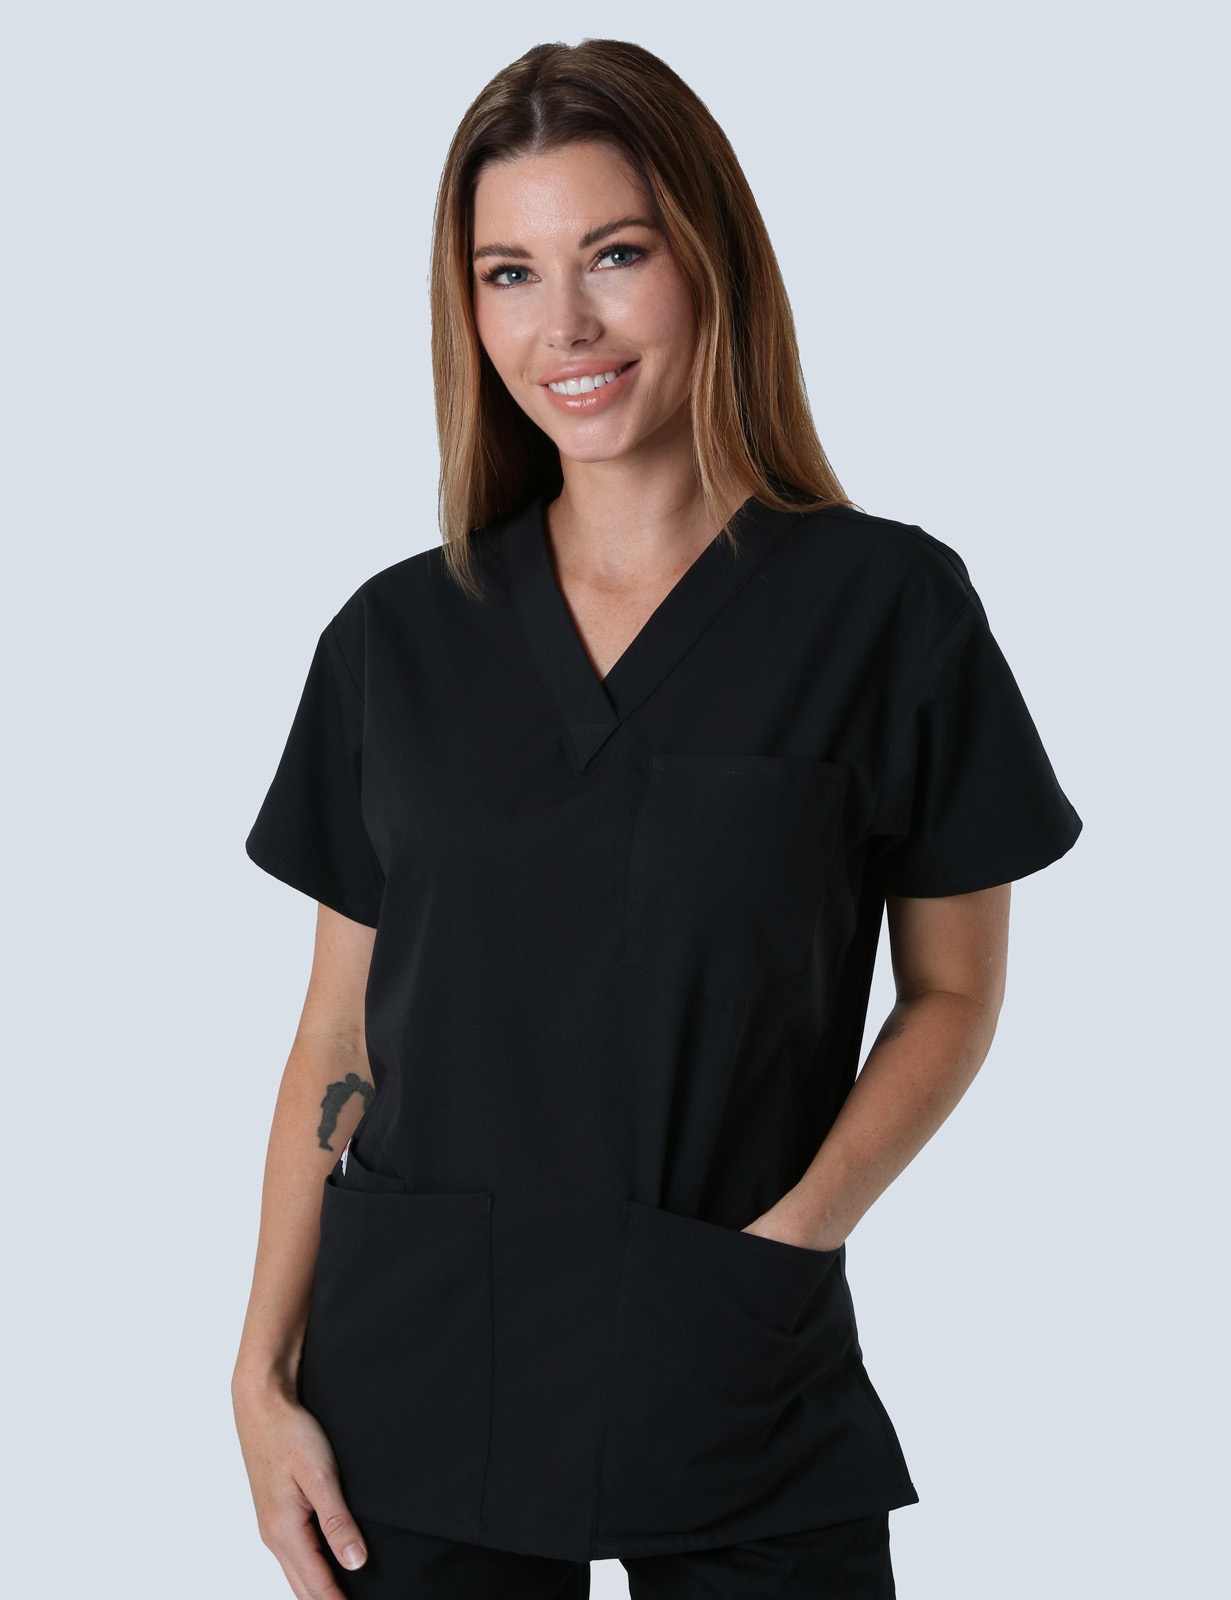 Queensland Children's Hospital Emergency Department Nurse Unit Manager Uniform Top Bundle  (4 Pocket Top  in Black incl Logos)